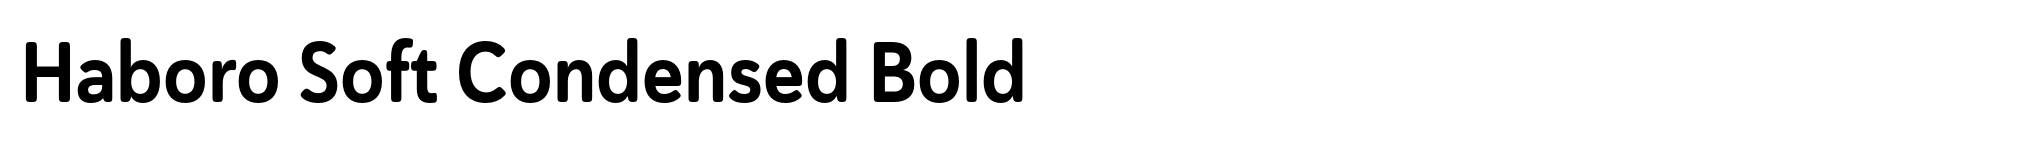 Haboro Soft Condensed Bold image